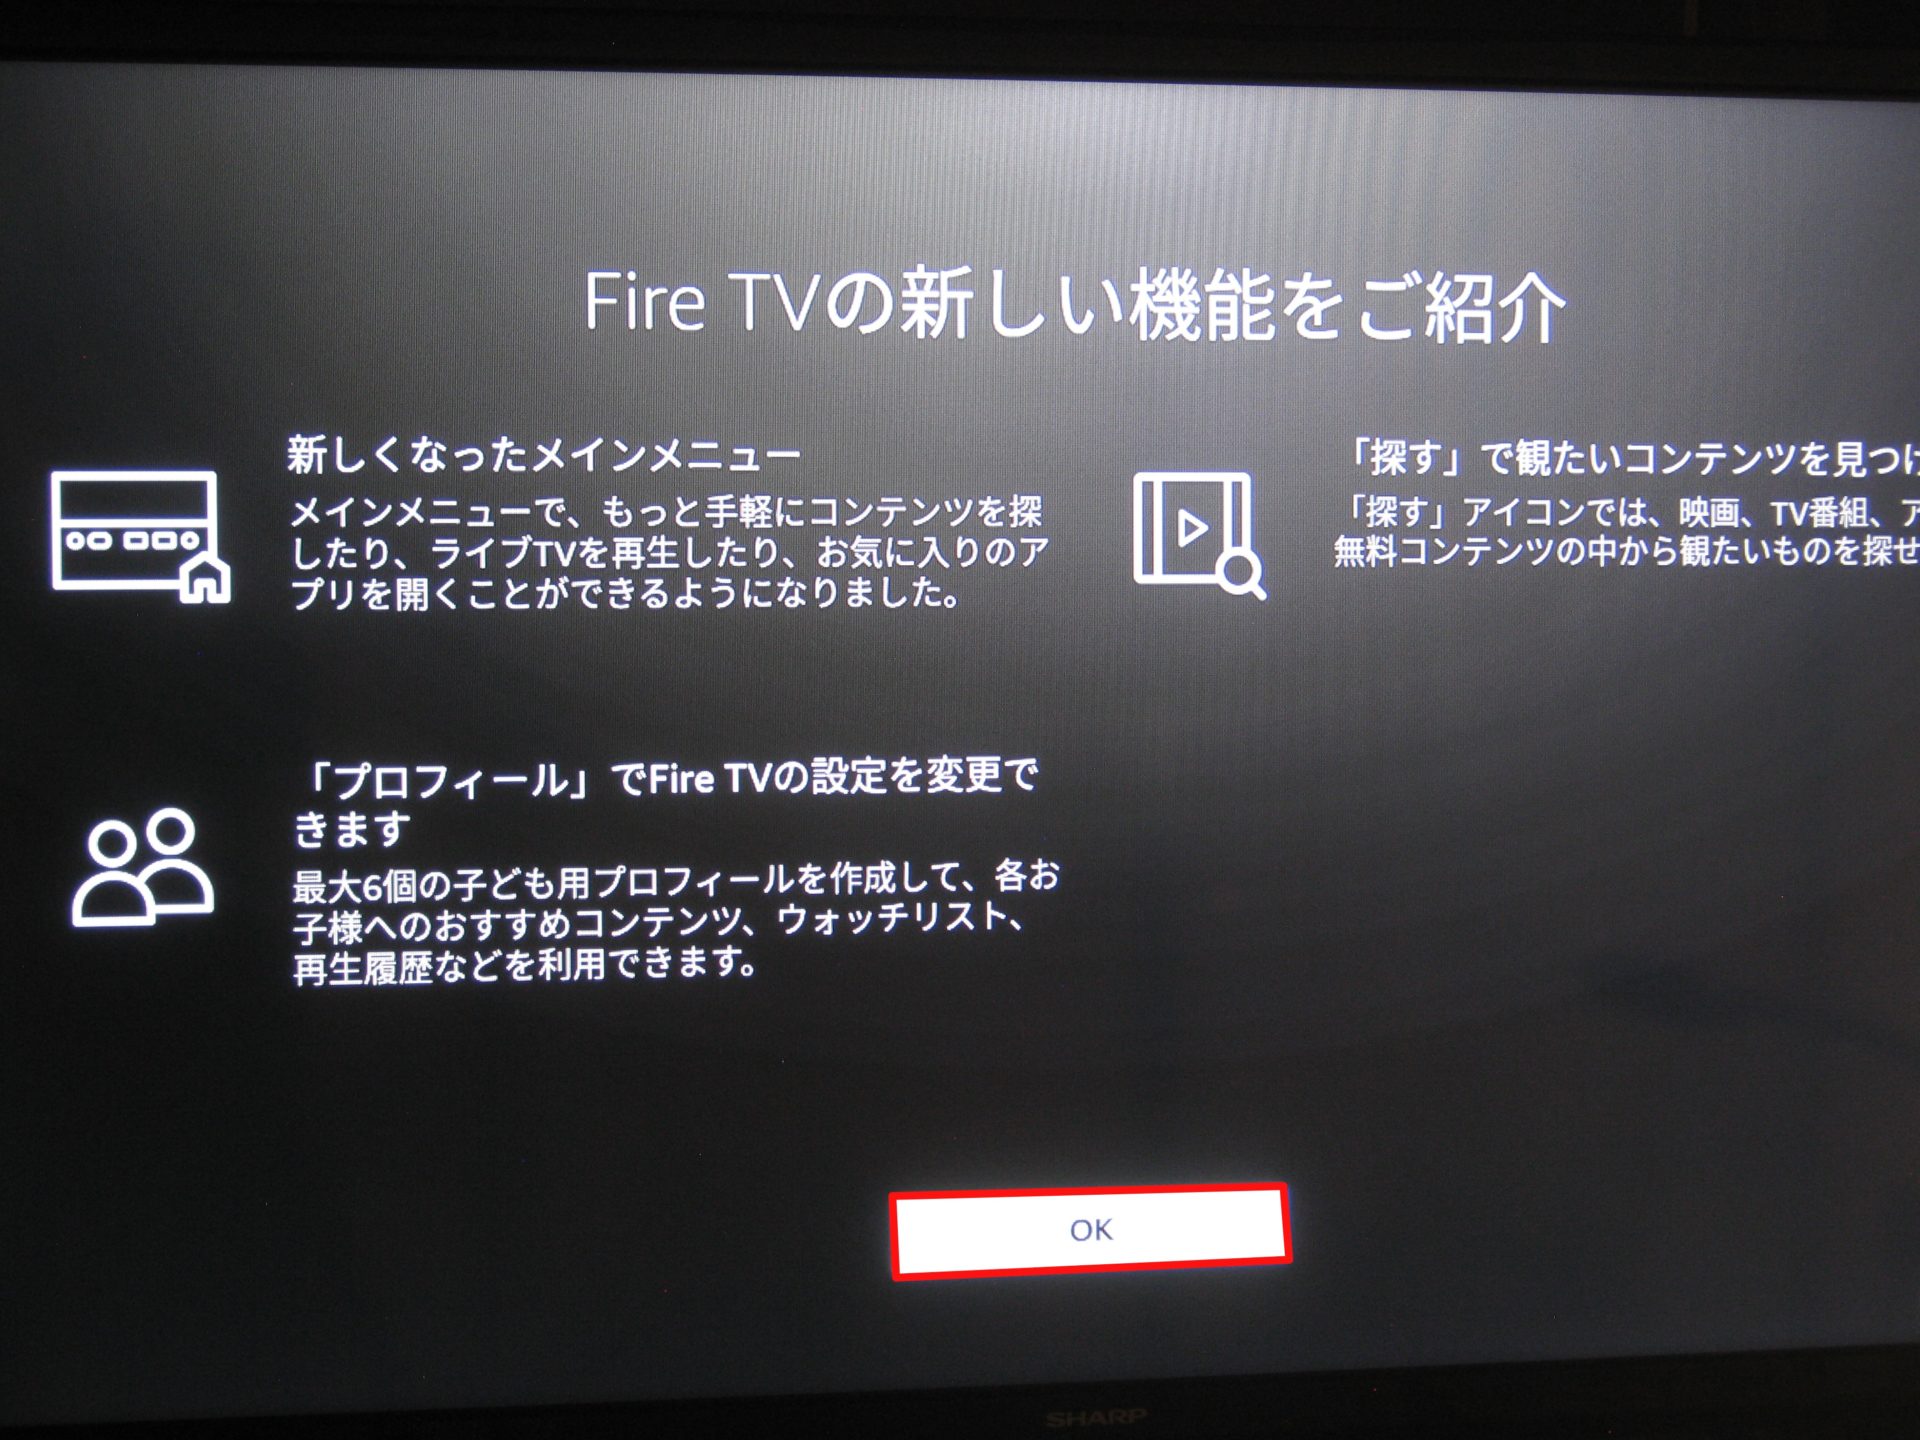 Fire TVの新しい機能をご紹介 が表示されたら OK をクリック